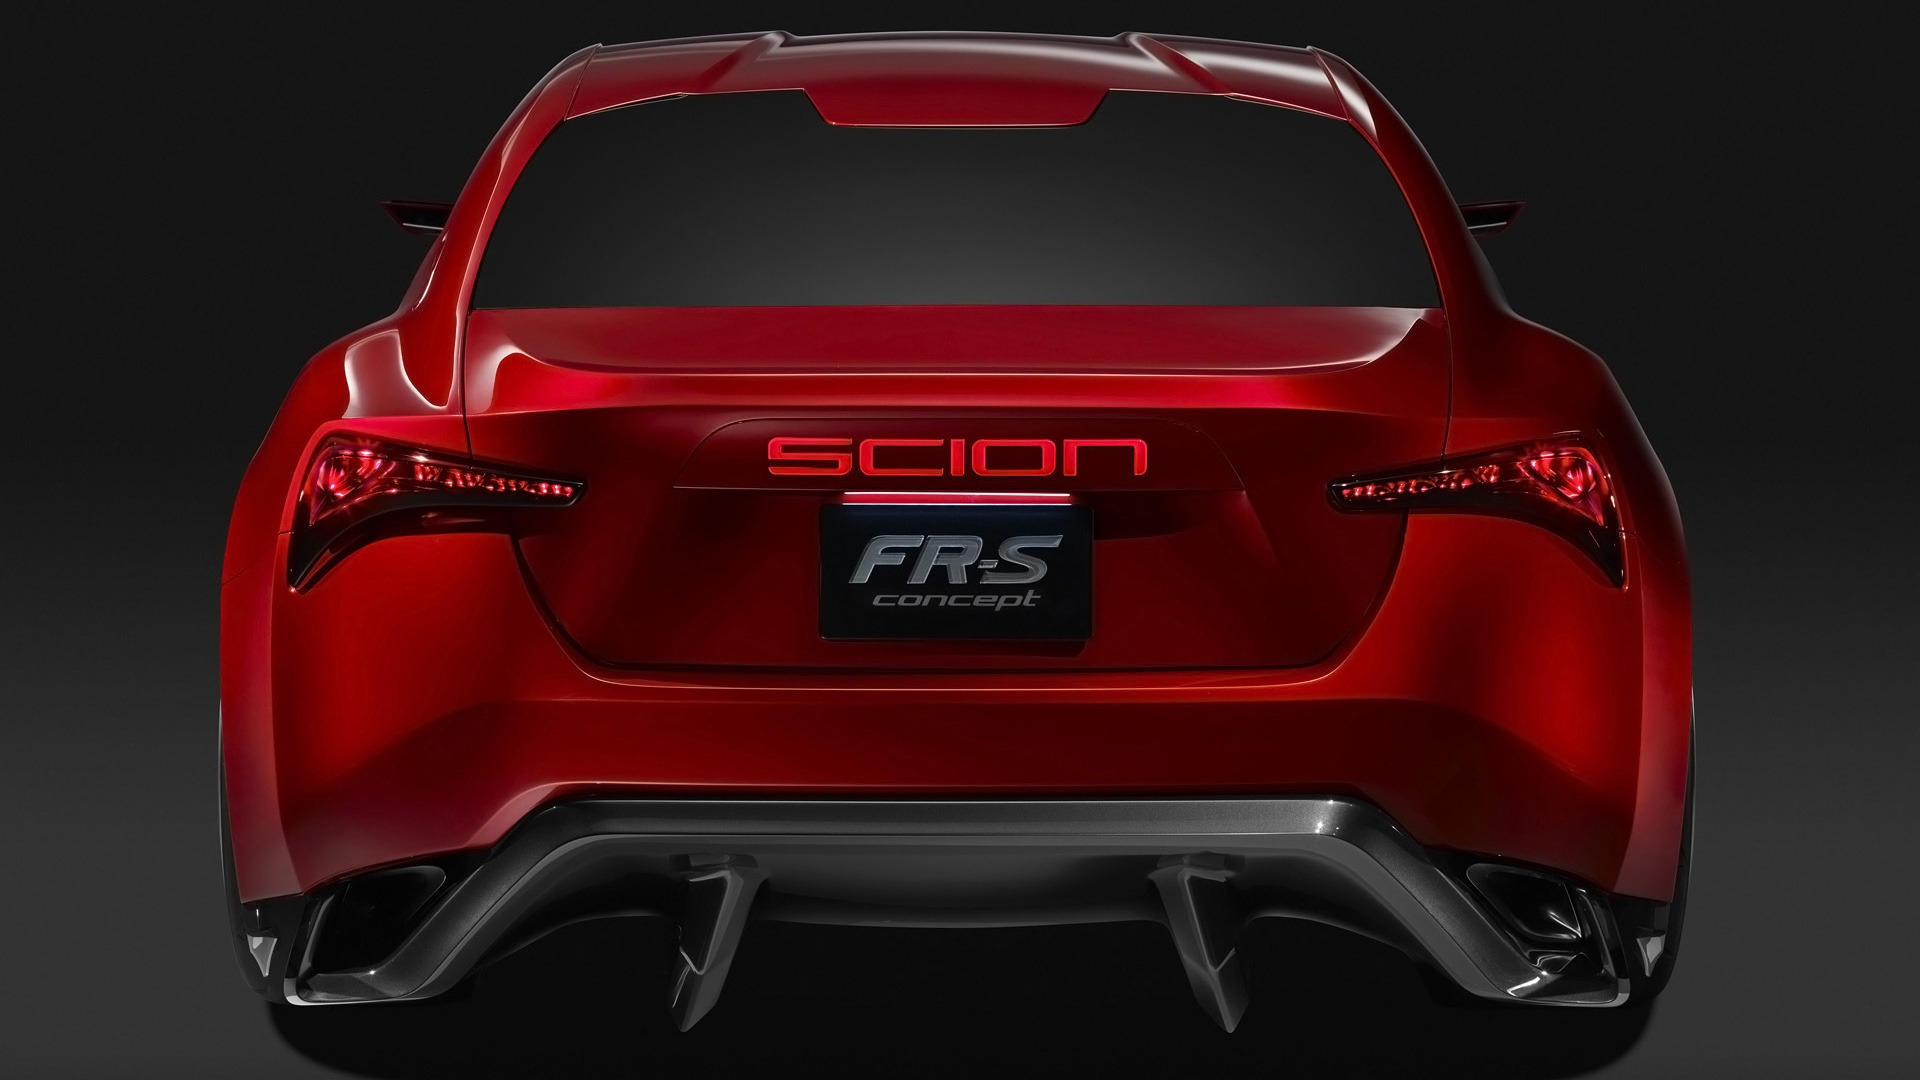 Scion FR S Concept Rear for 1920 x 1080 HDTV 1080p resolution